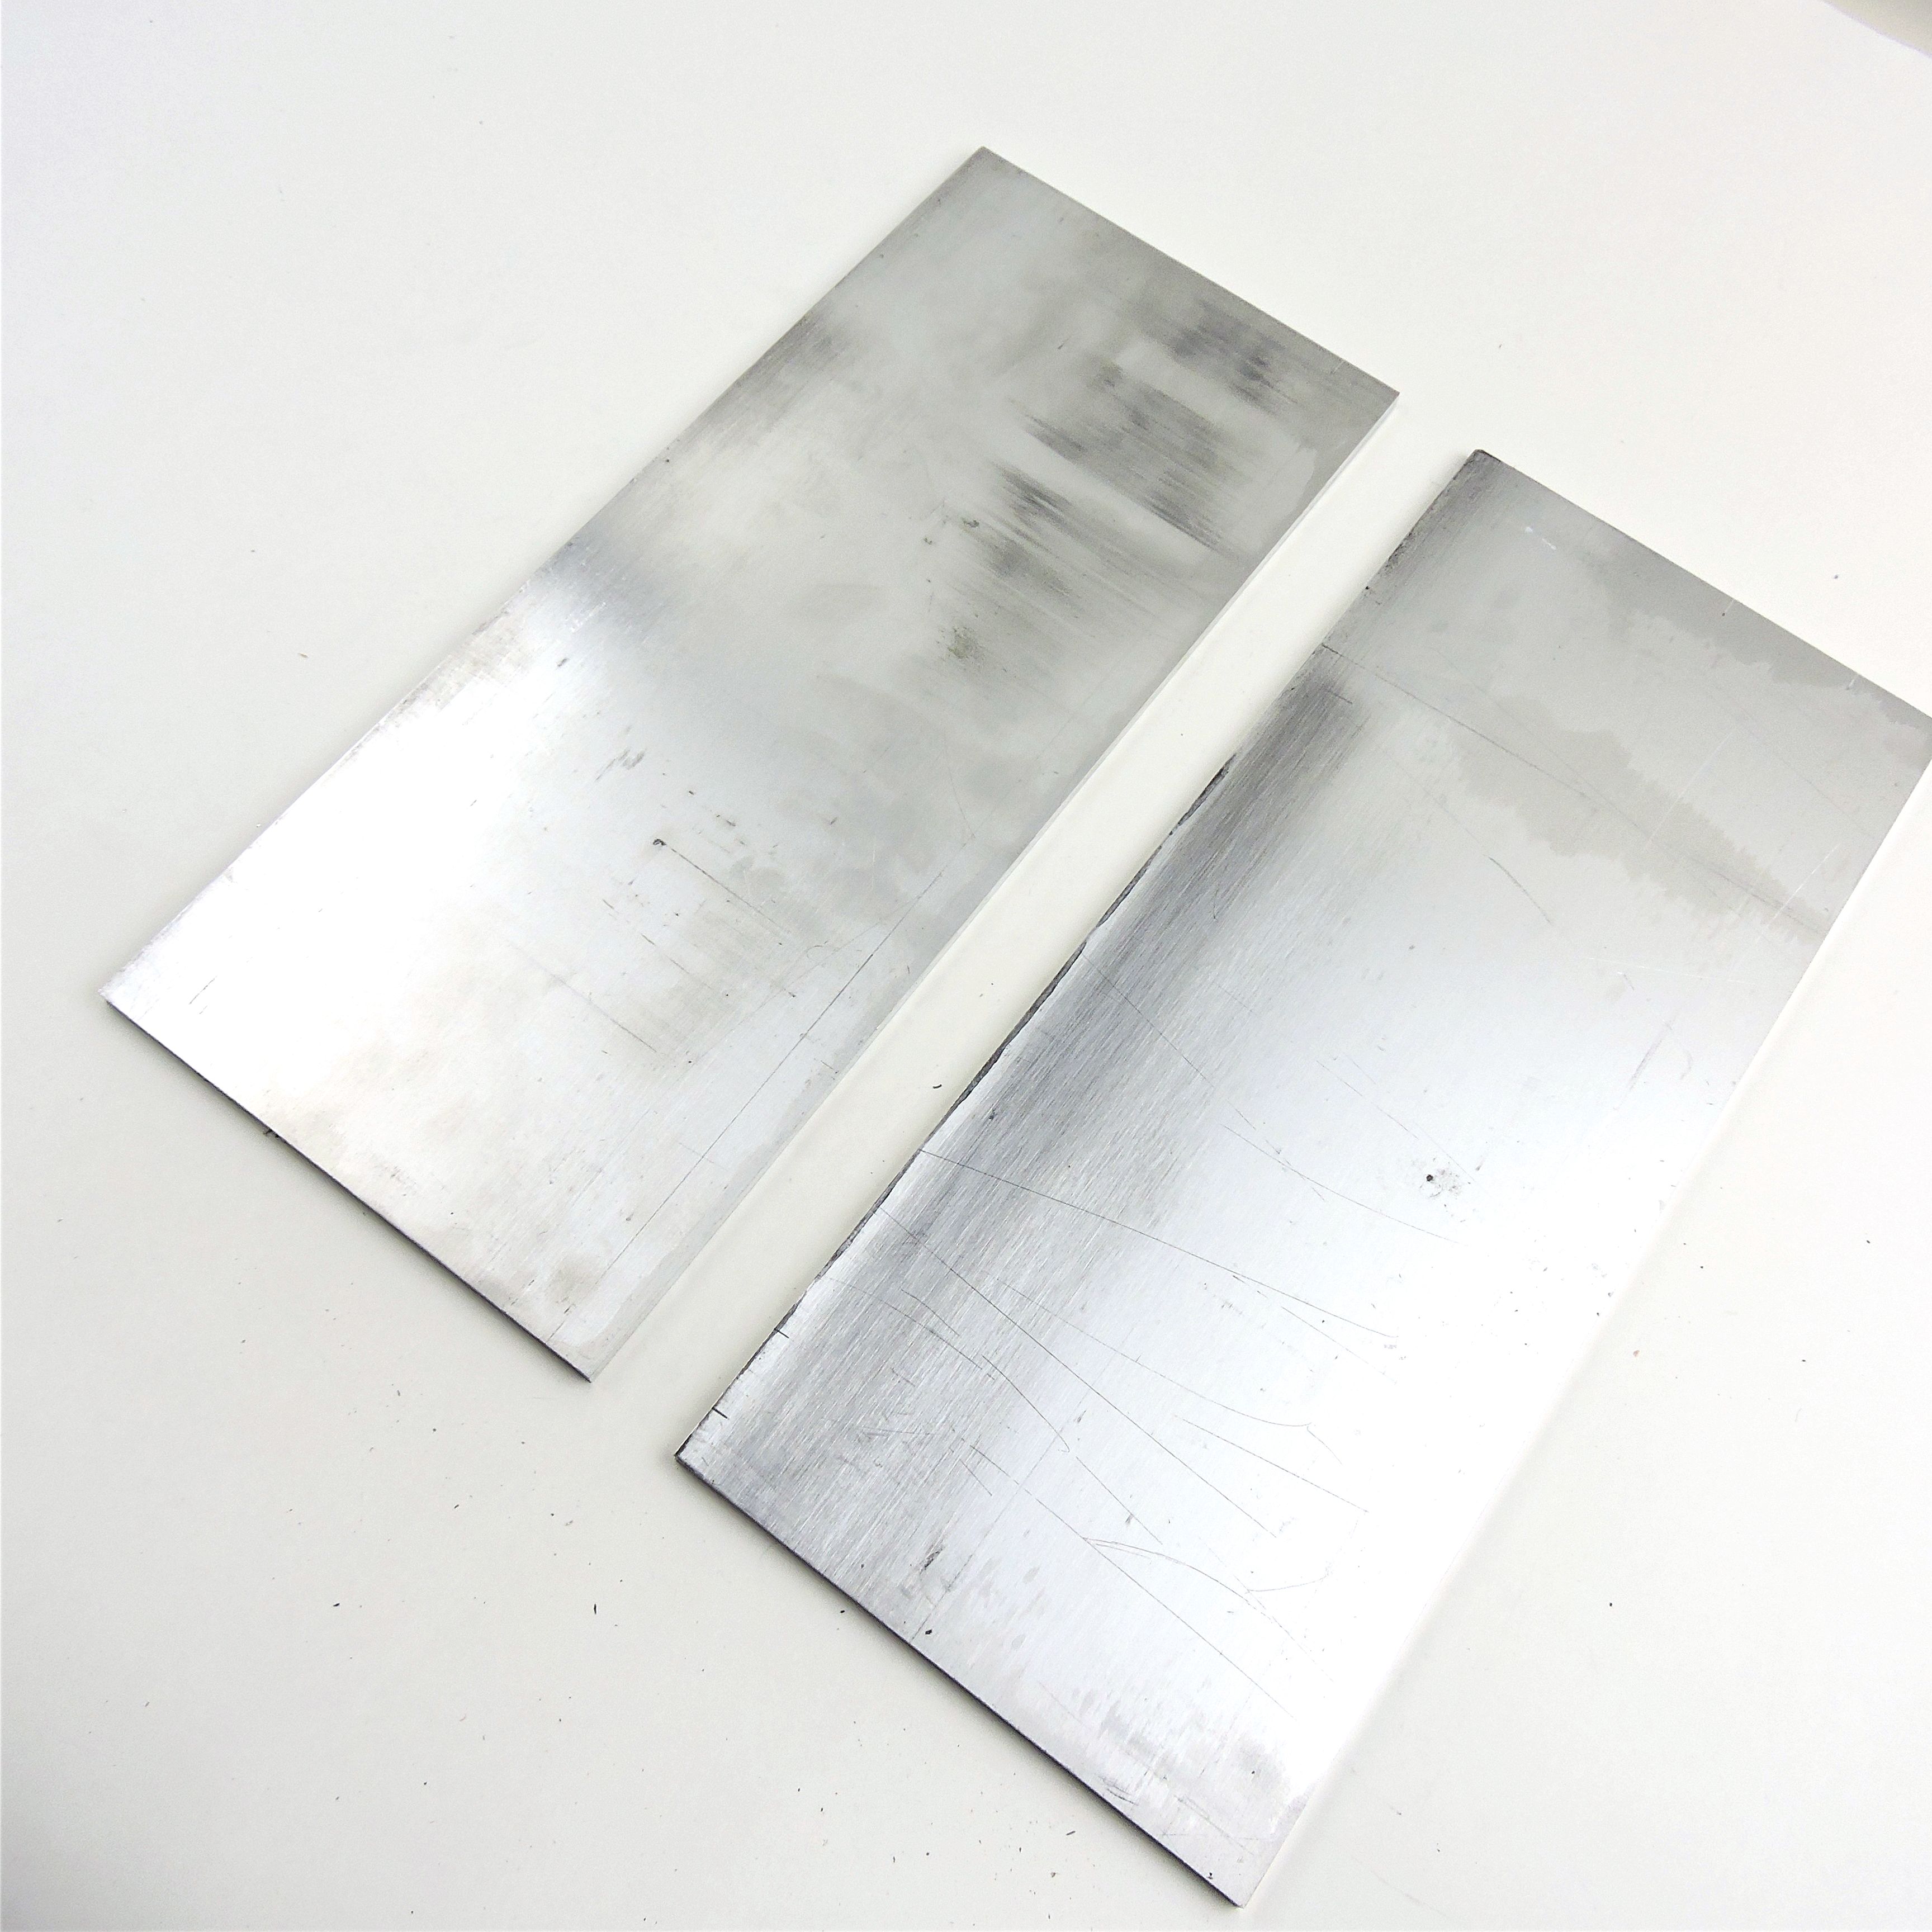 .25" thick 1/4 Aluminum 6061 PLATE 7.125" x 17.5" Long QTY 2 sku 208008 eBay